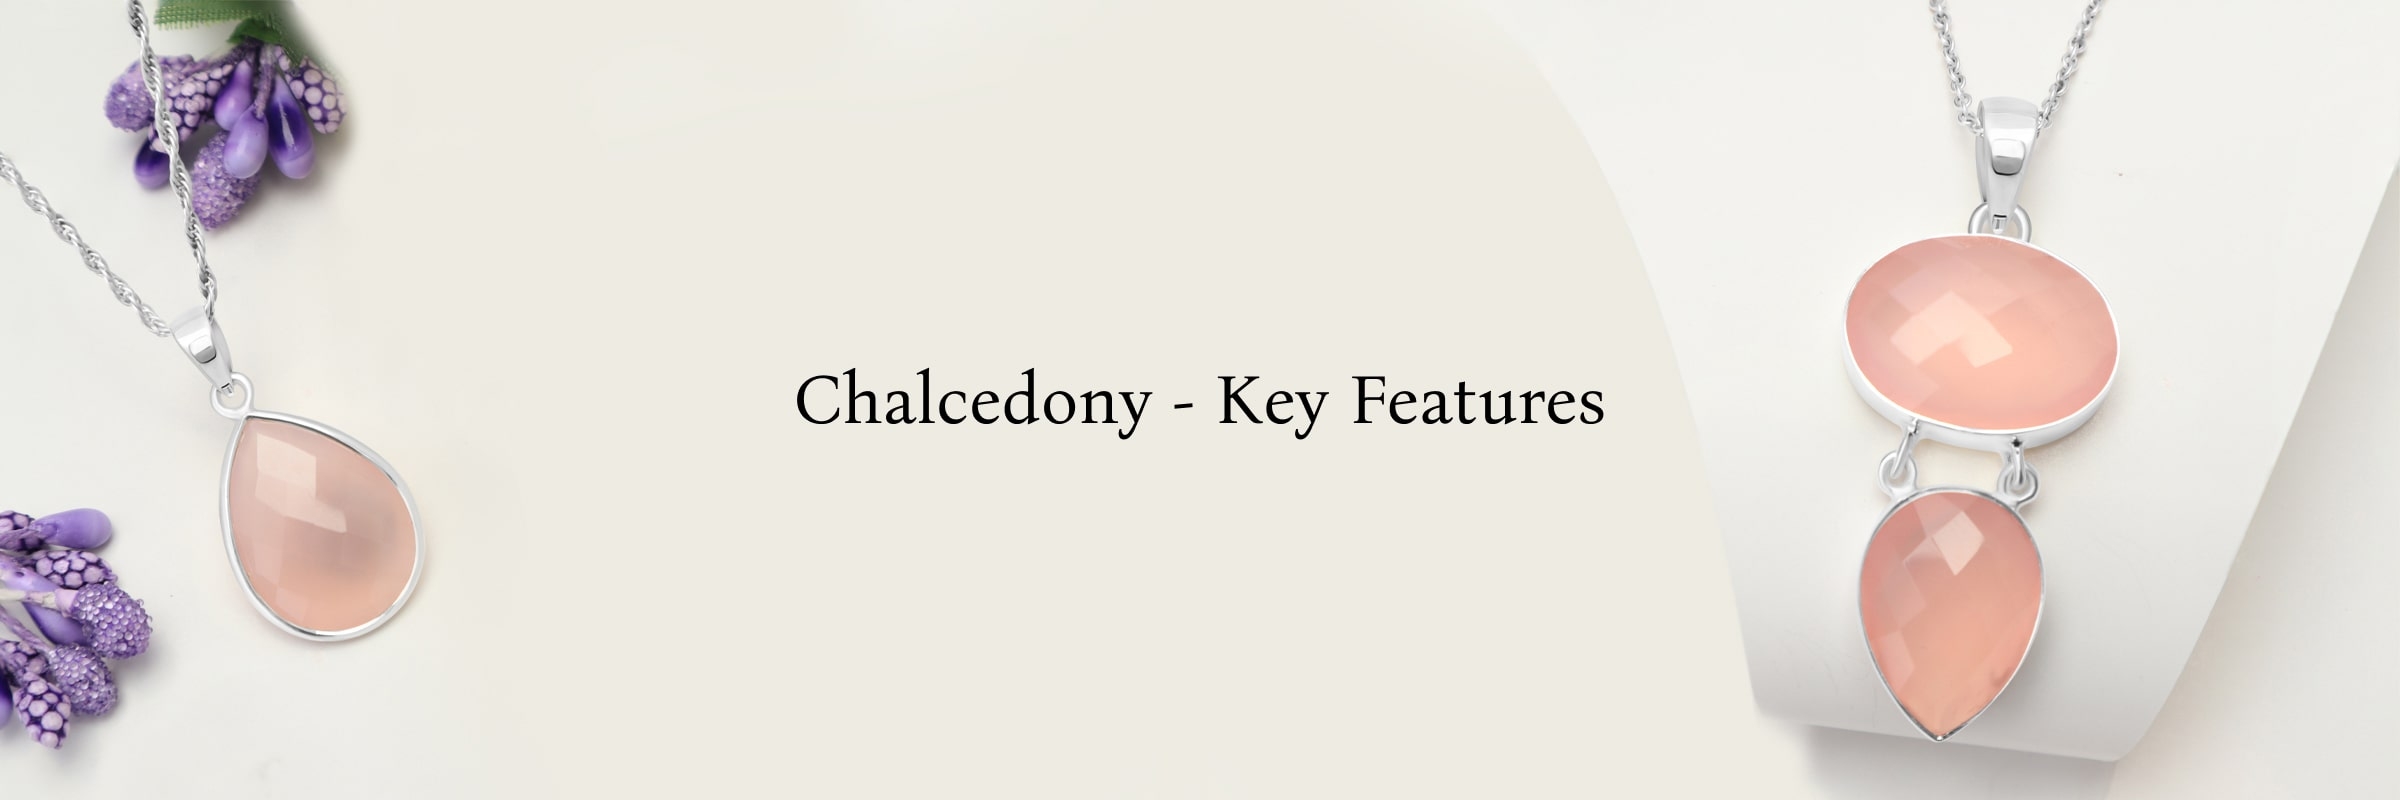 Characteristics of Chalcedony